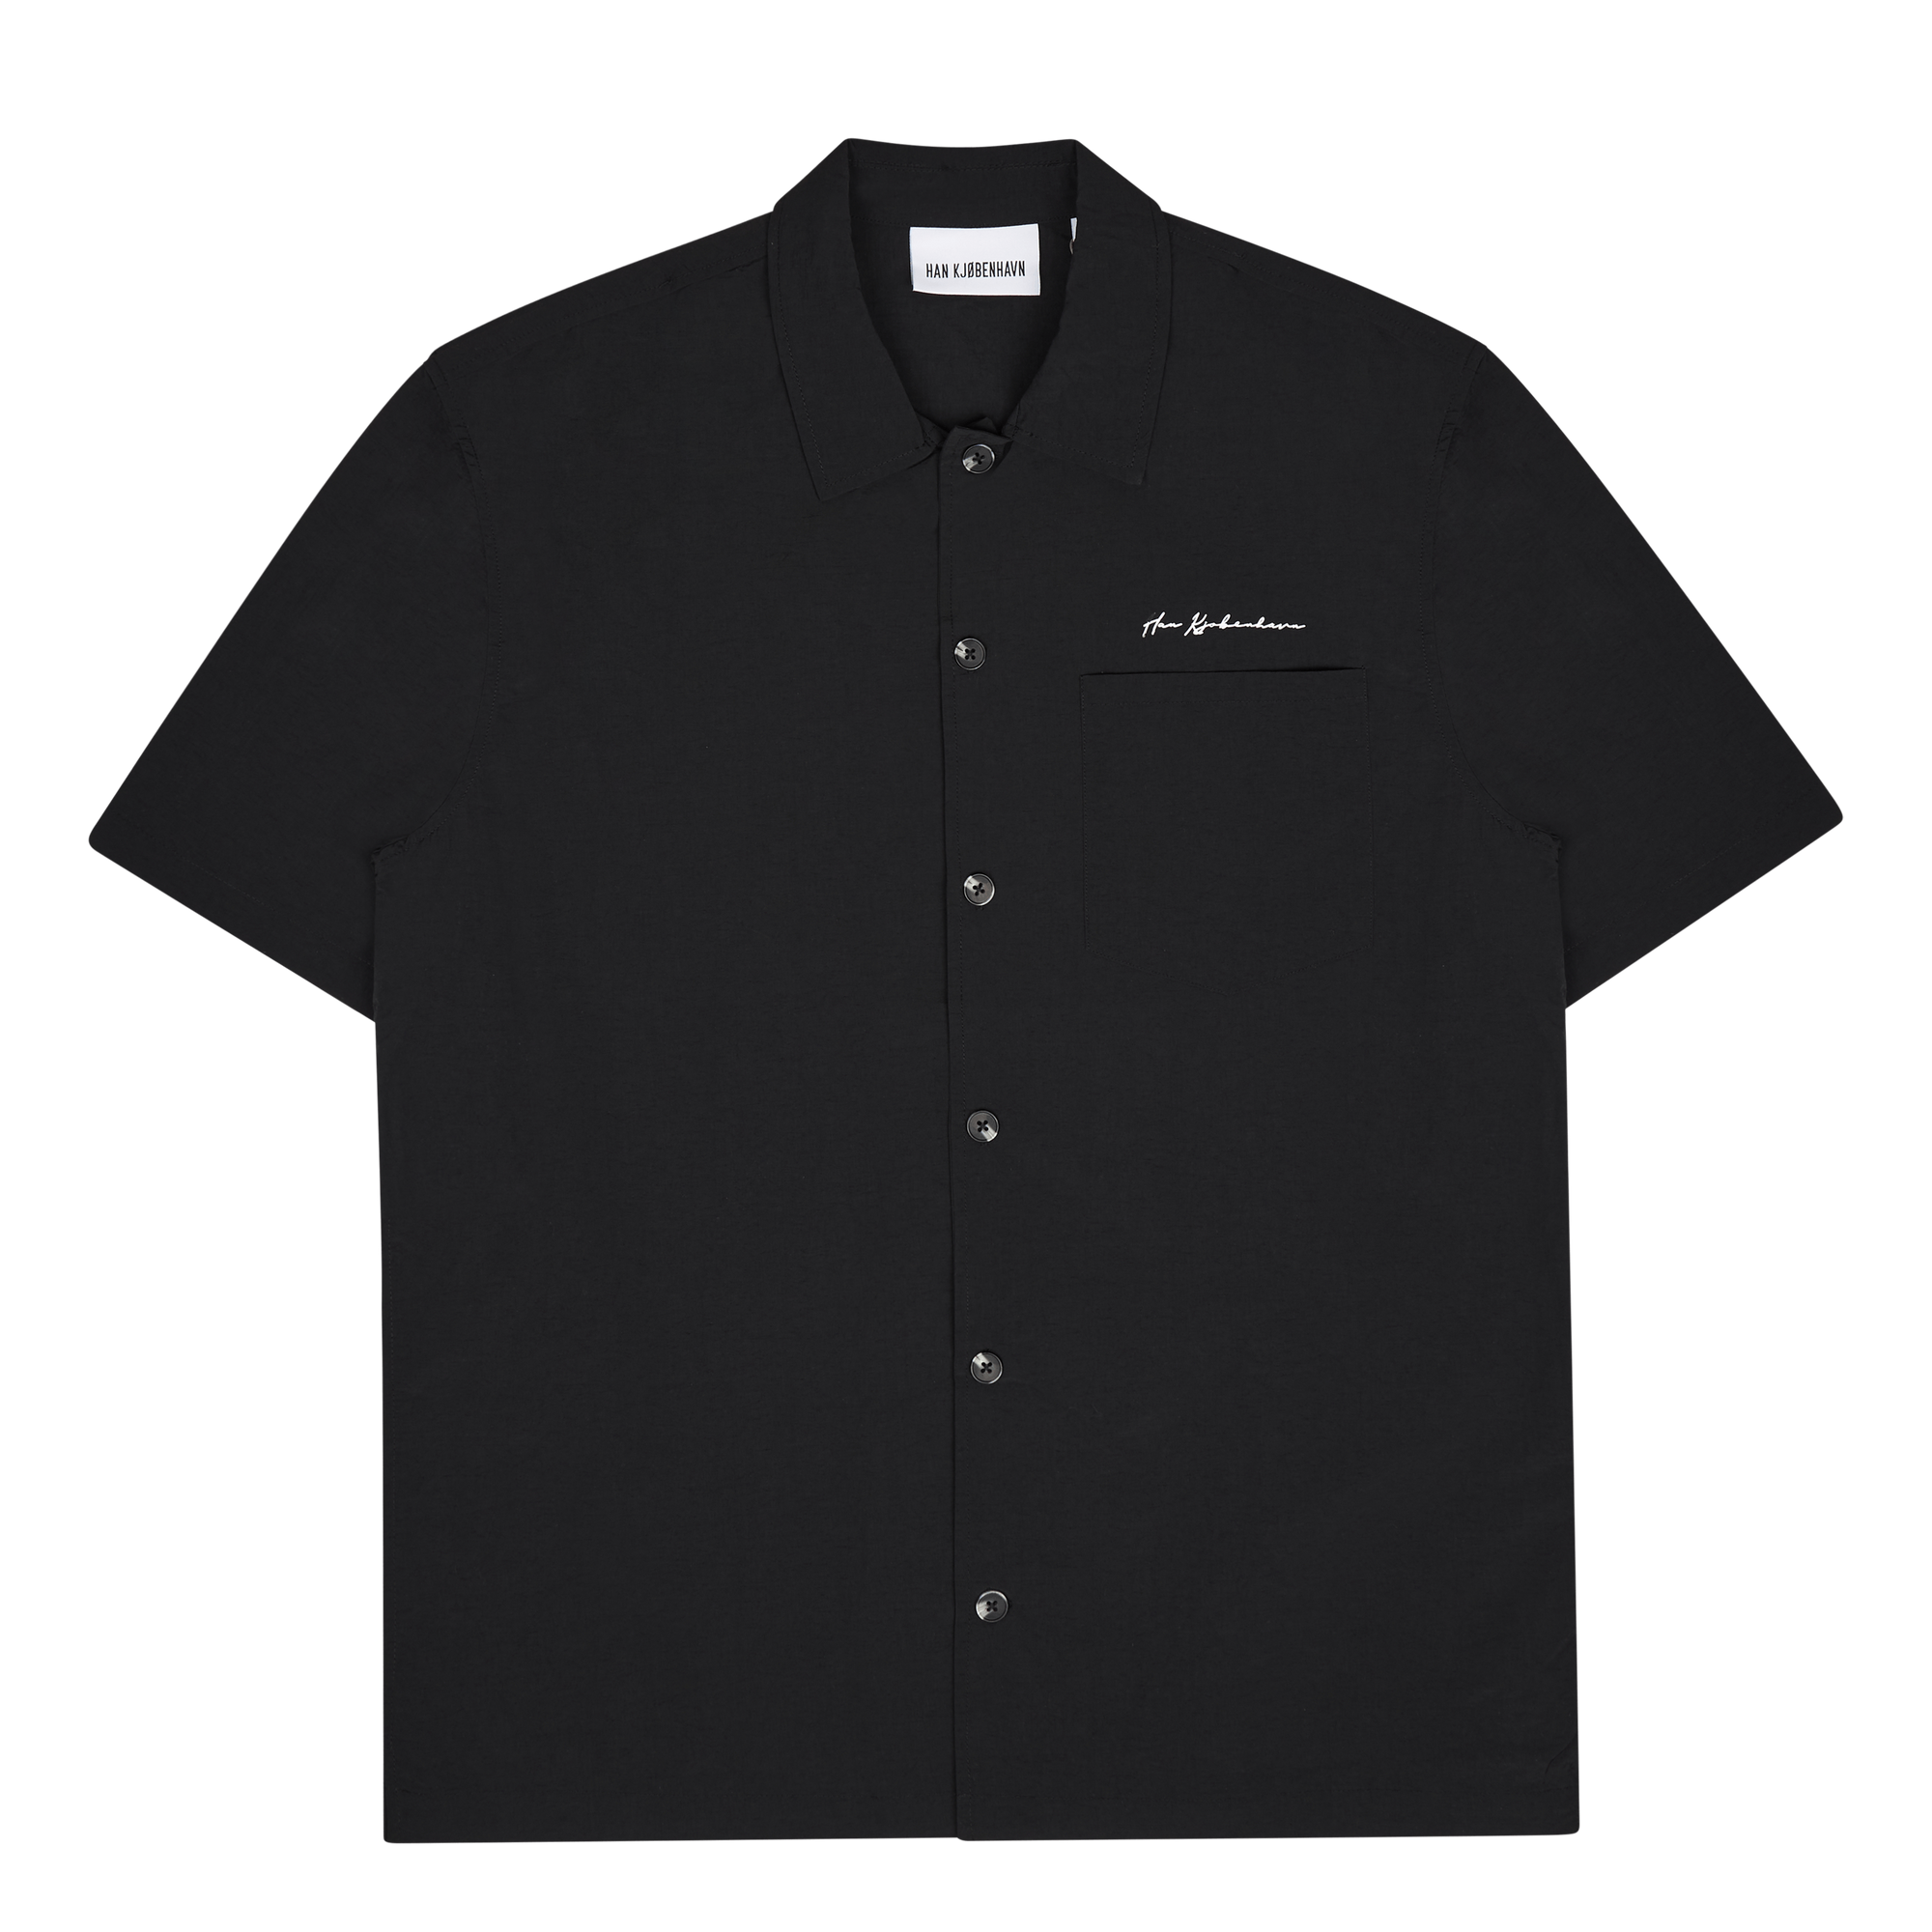 Nylon Summer Shirt Short Sleev Black